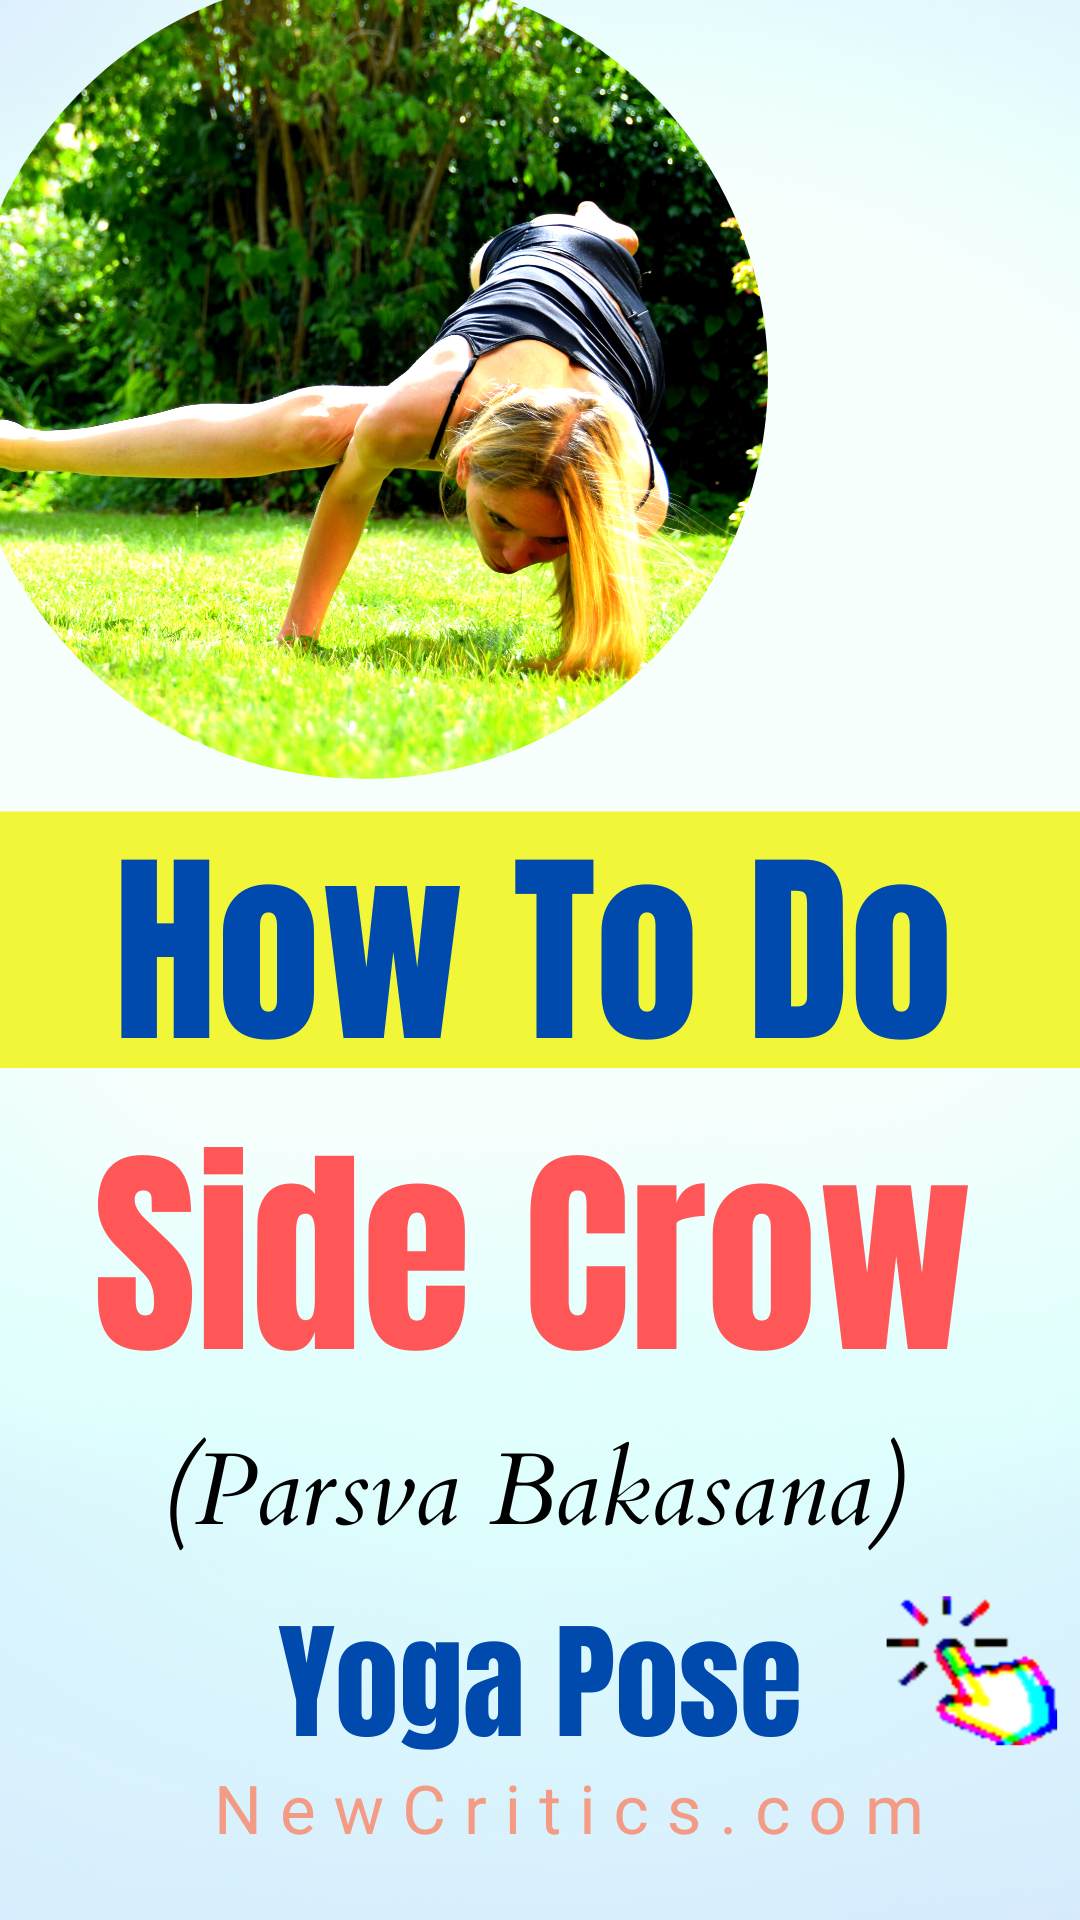 How To Do Side Crow / Canva